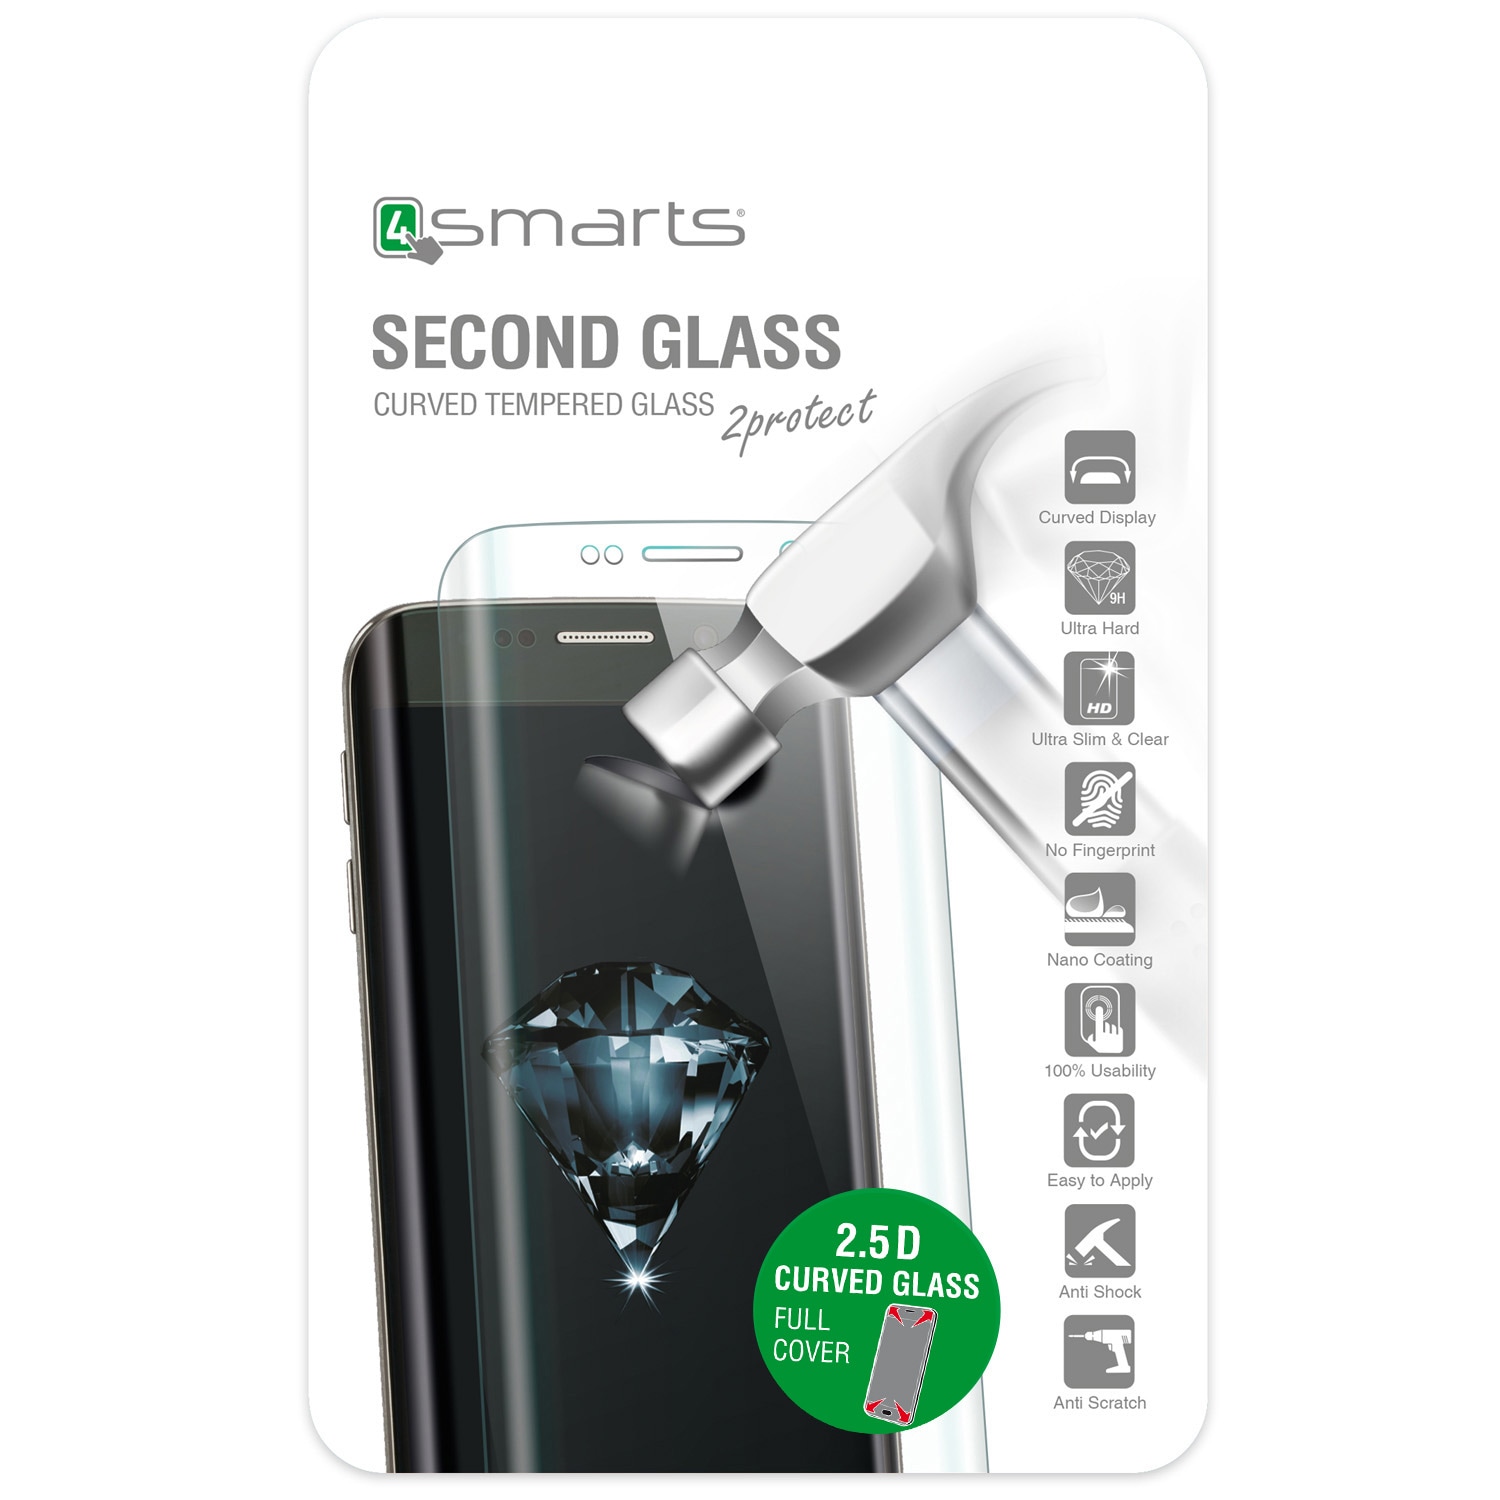 4smarts Second Glass Curved 2.5D til iPhone 6 / 6s Plus - Hvid